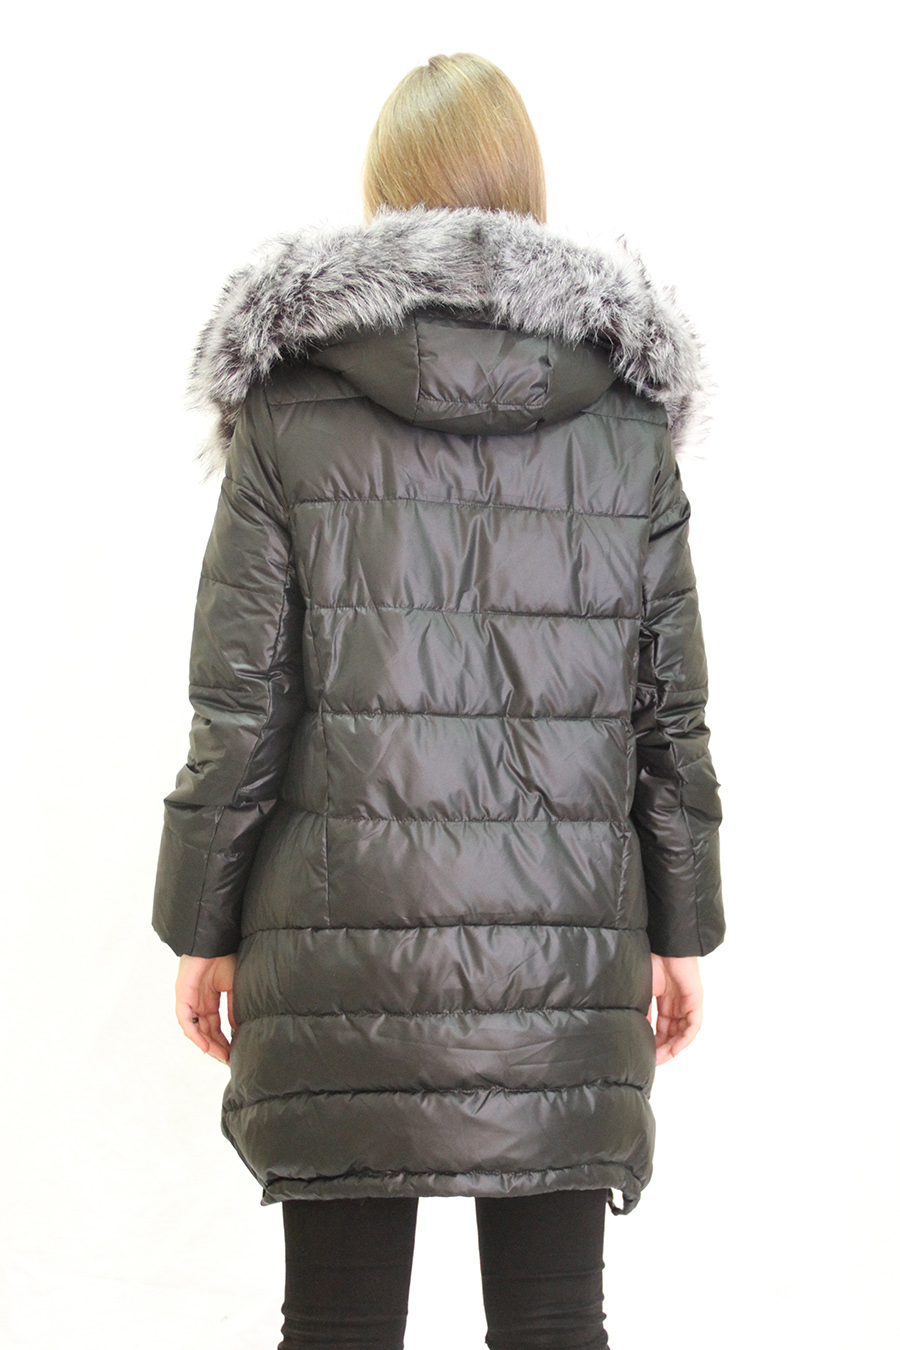 Стильная женская куртка для зимы (Cattail Willow)